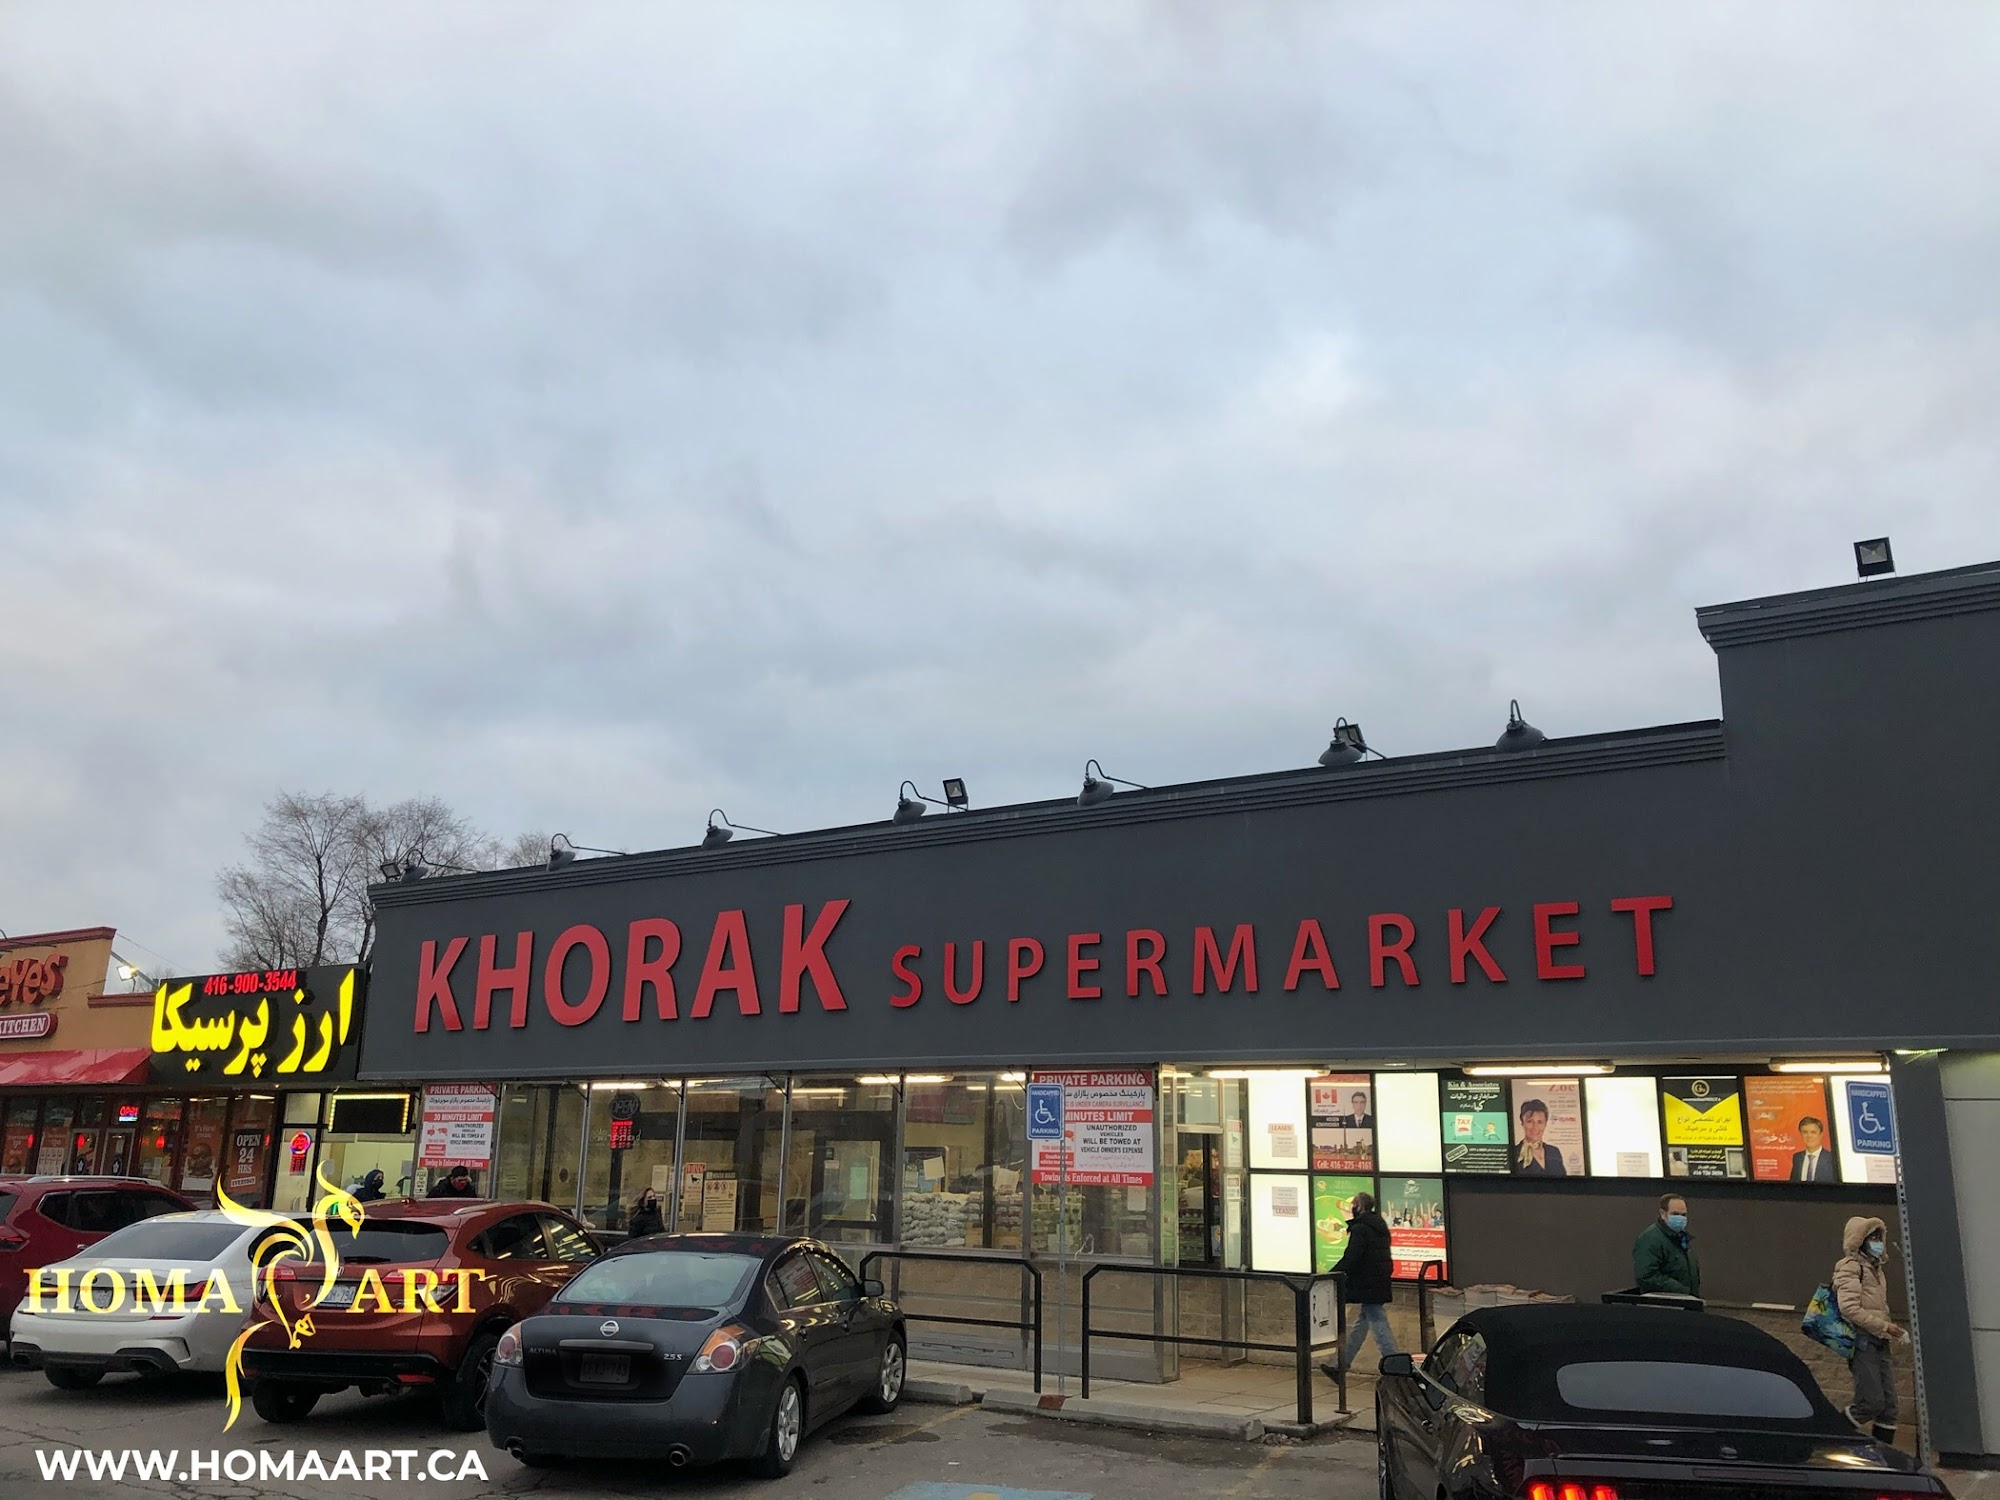 Khorak Supermarket (Super Khorak)